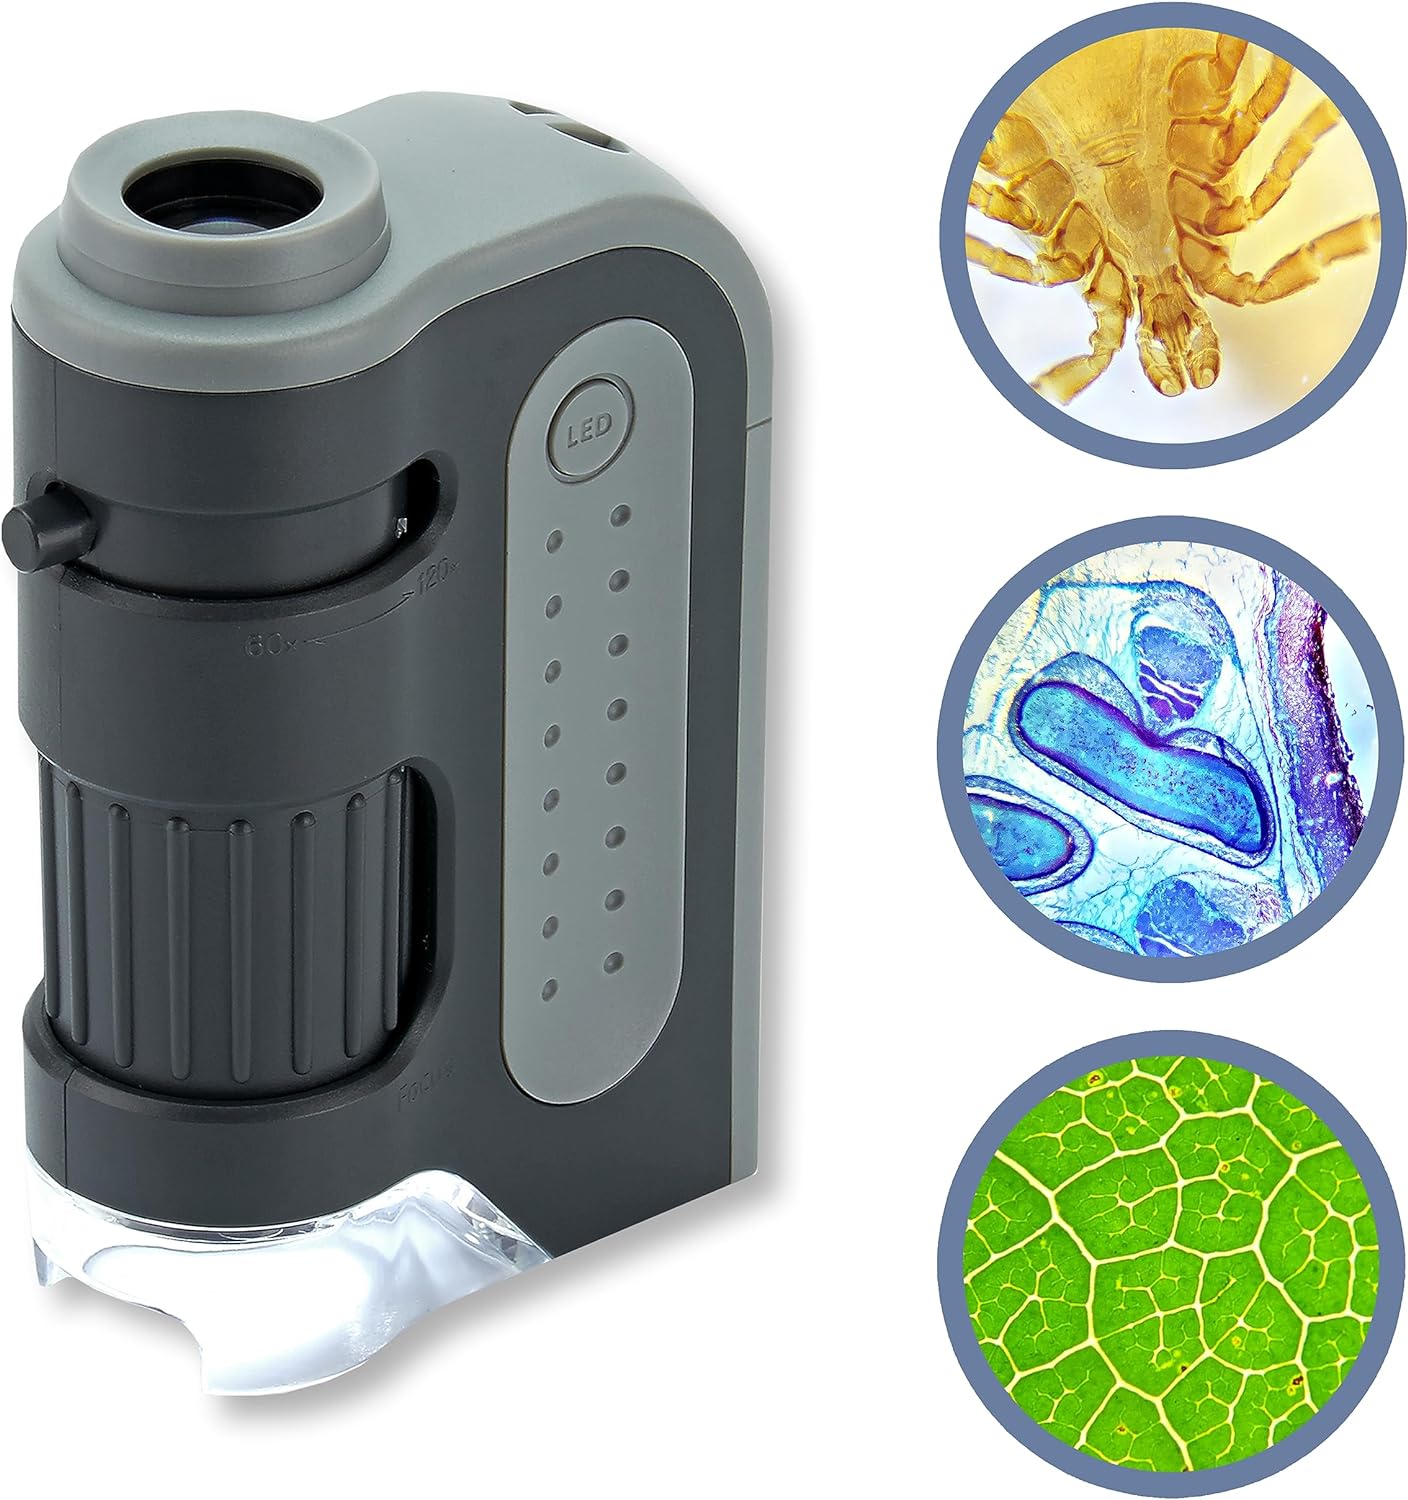 Thnk: Picks - Carson MicroBrite Plus 60x-120x LED Lighted Pocket Microscope